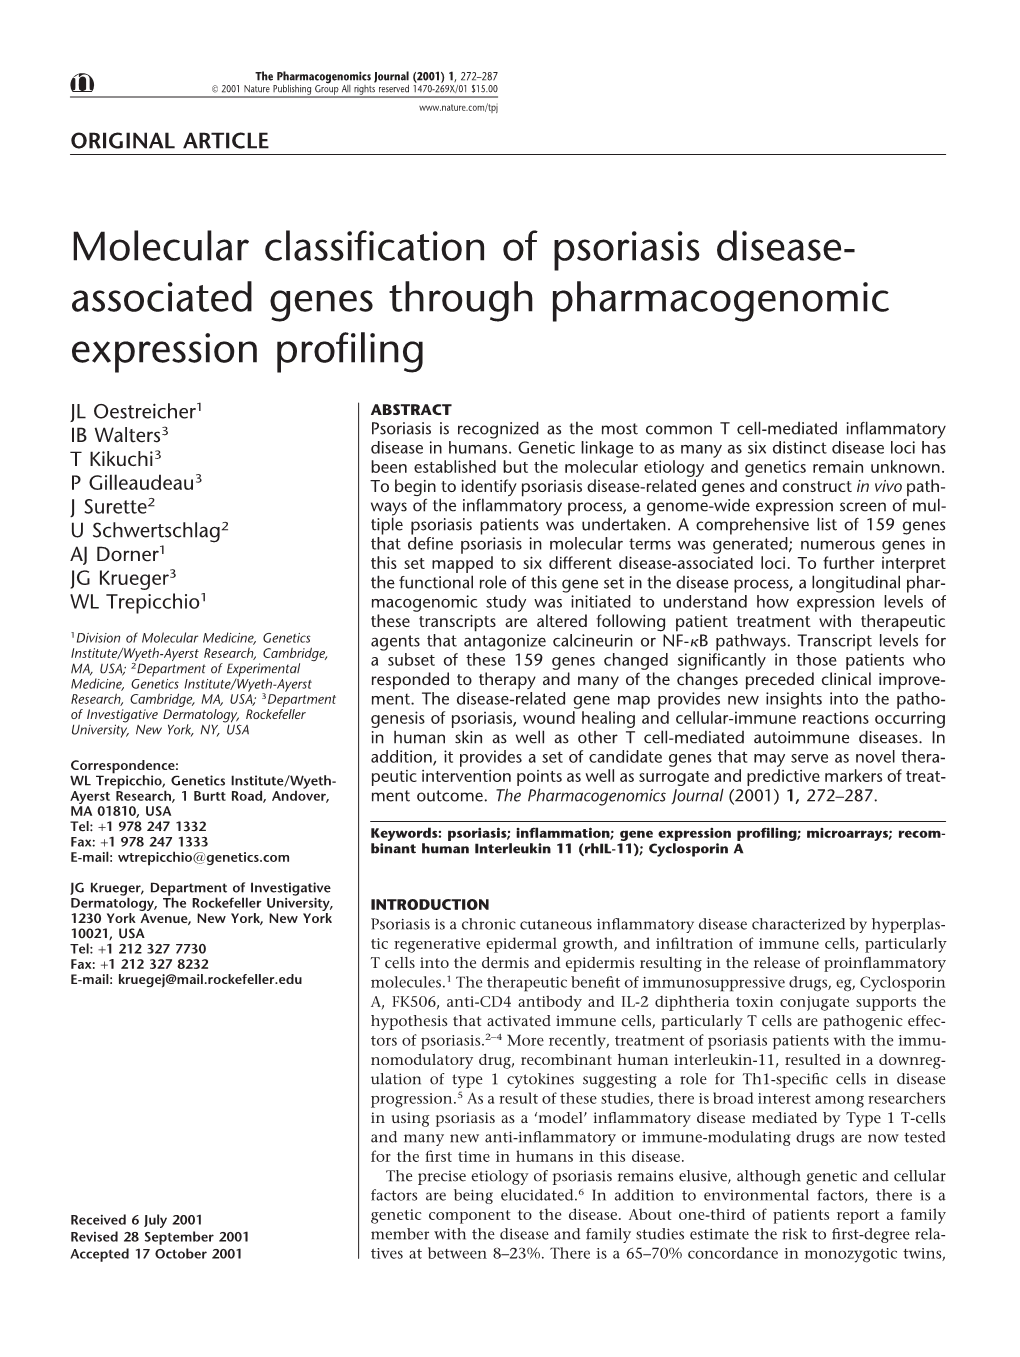 Molecular Classification of Psoriasis Disease- Associated Genes